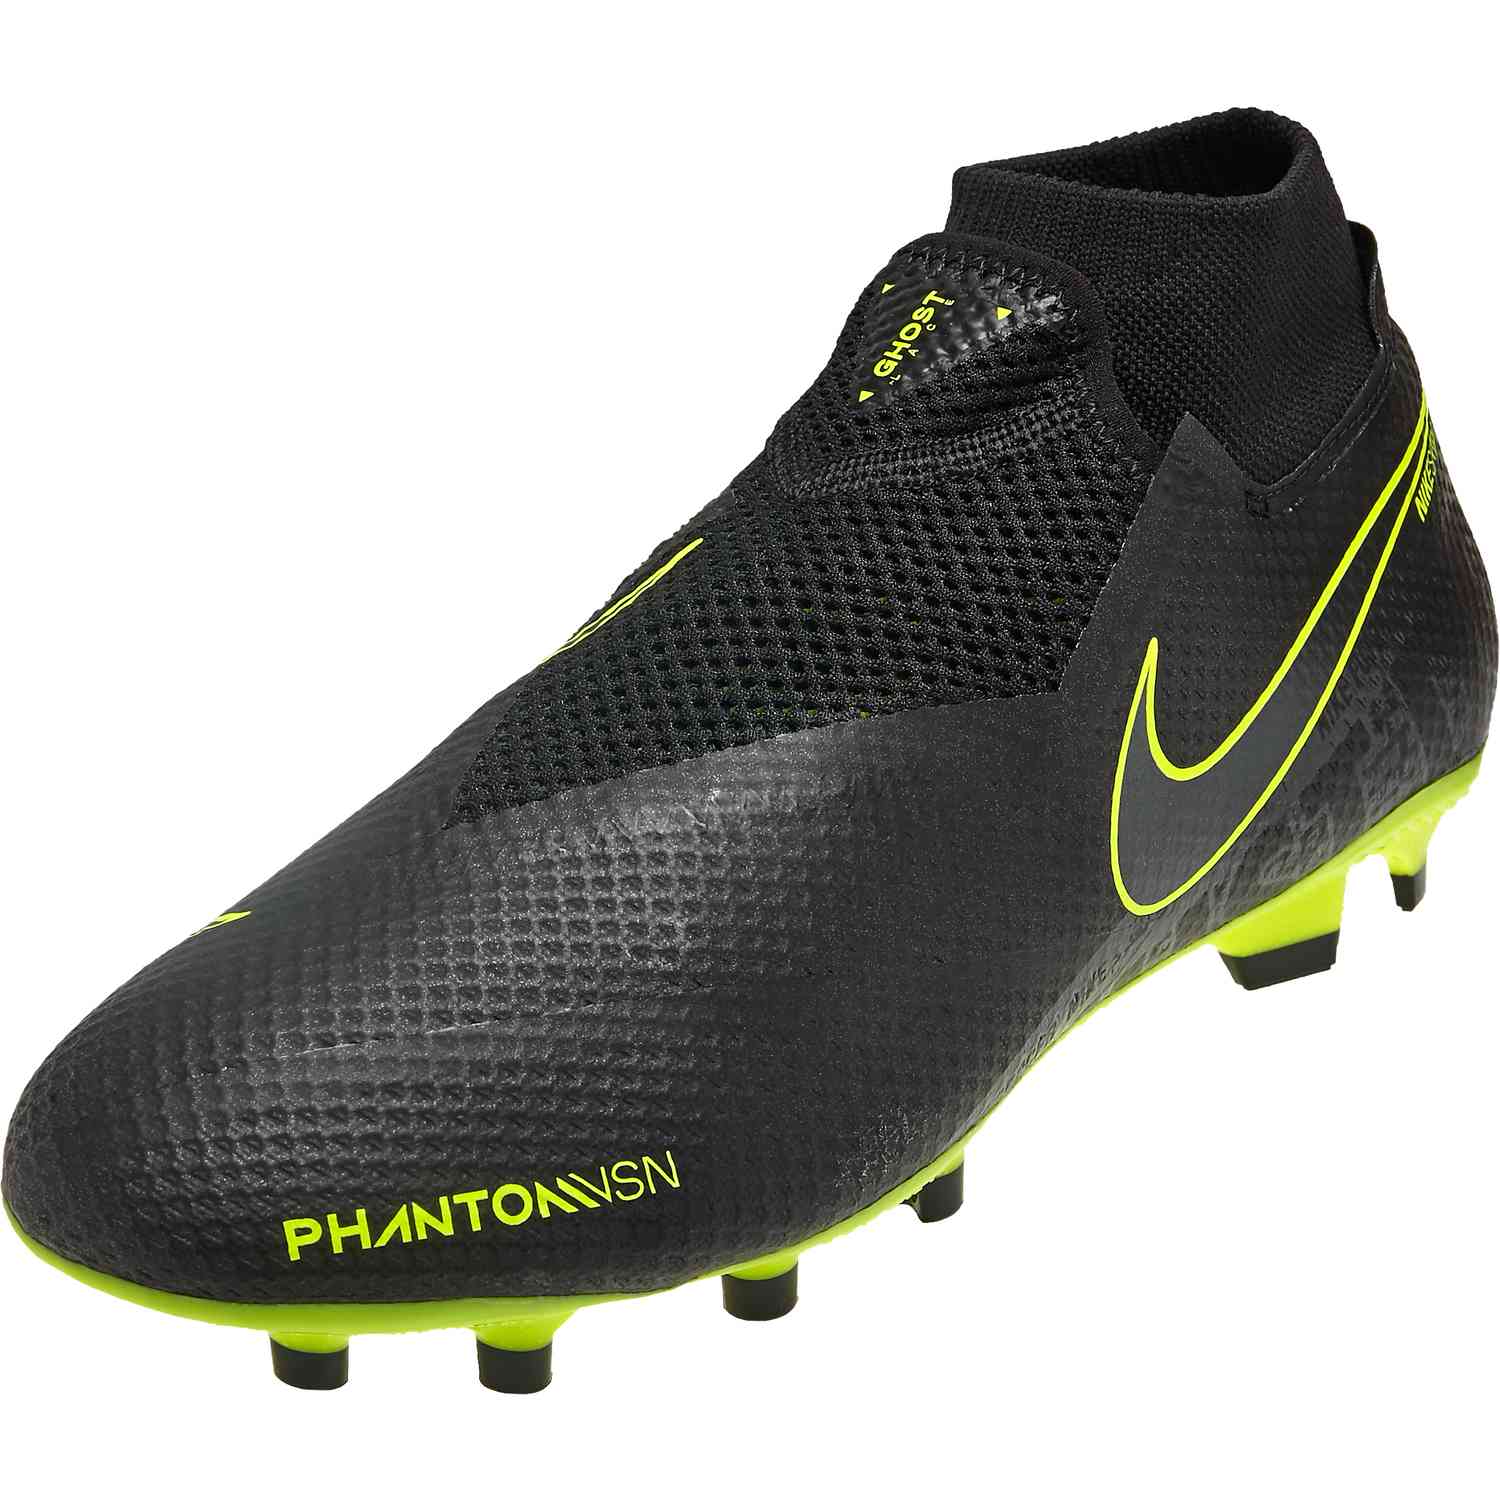 Nike Phantom Vision Pro FG - Under the Radar - SoccerPro